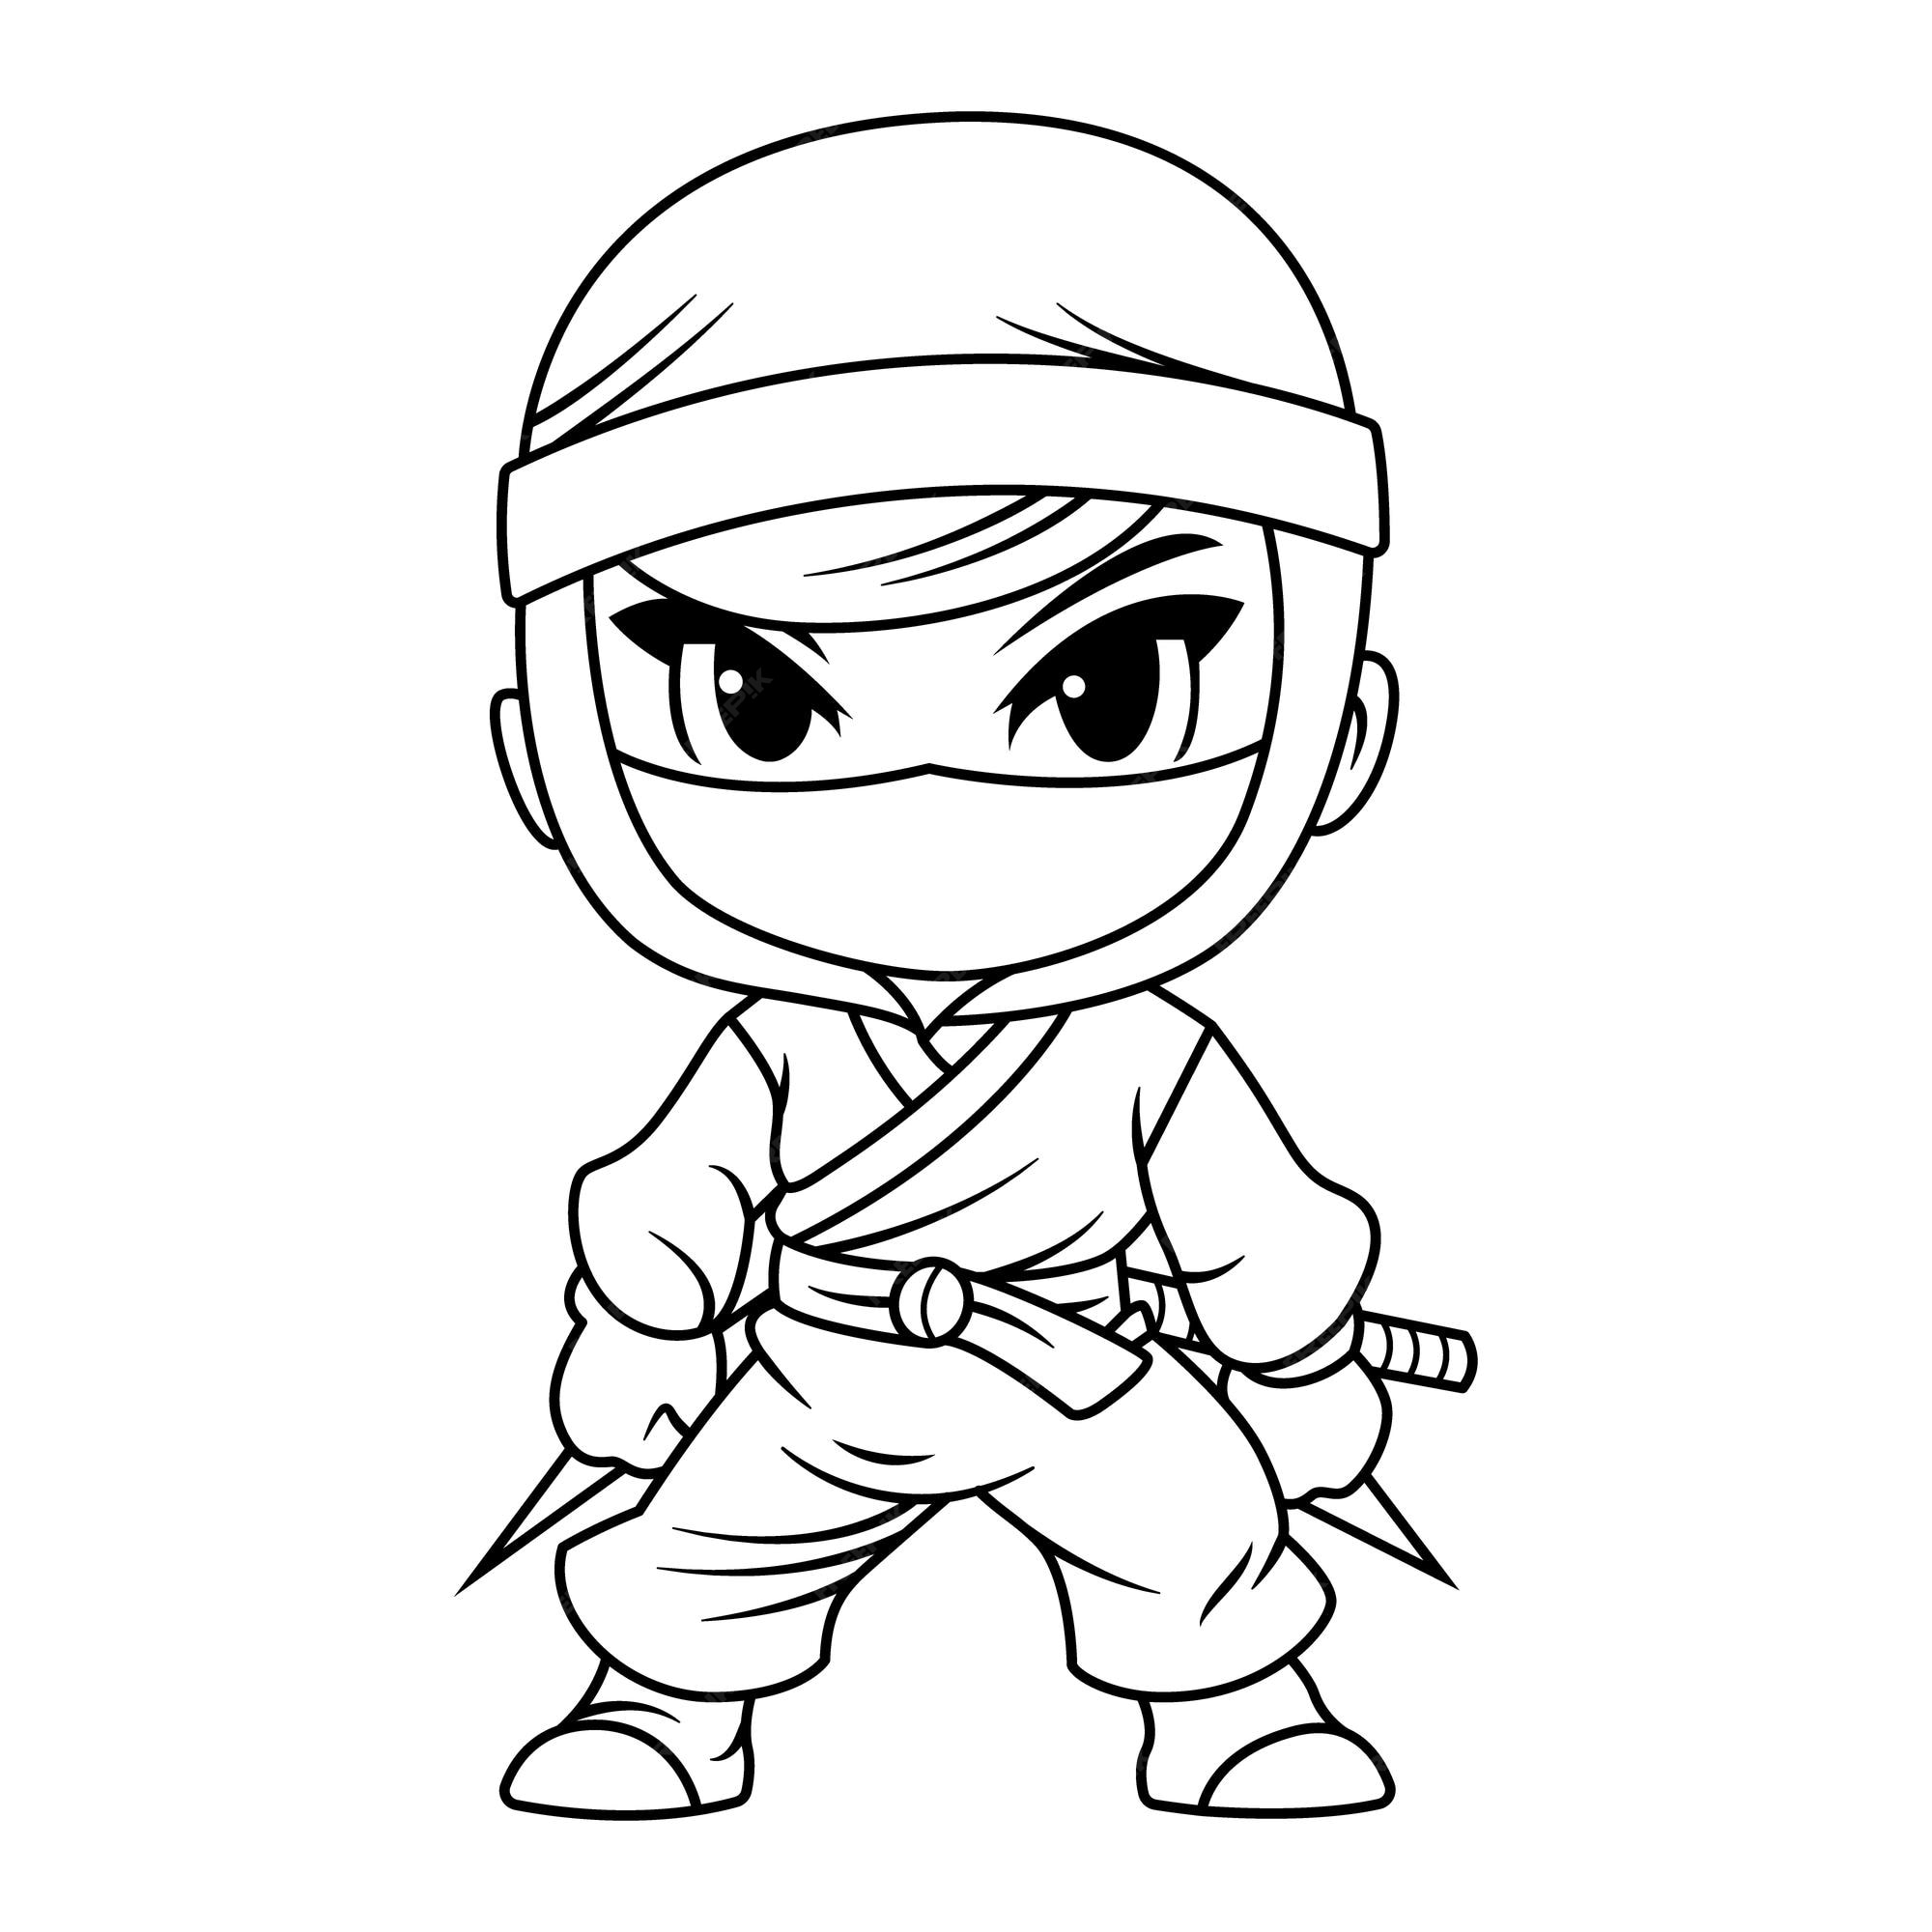 https://img.freepik.com/premium-vector/adorable-ninja-coloring-page-isolated-clean-minimalistic-simple-line-artwork-kids-friendly_708456-246.jpg?w=2000